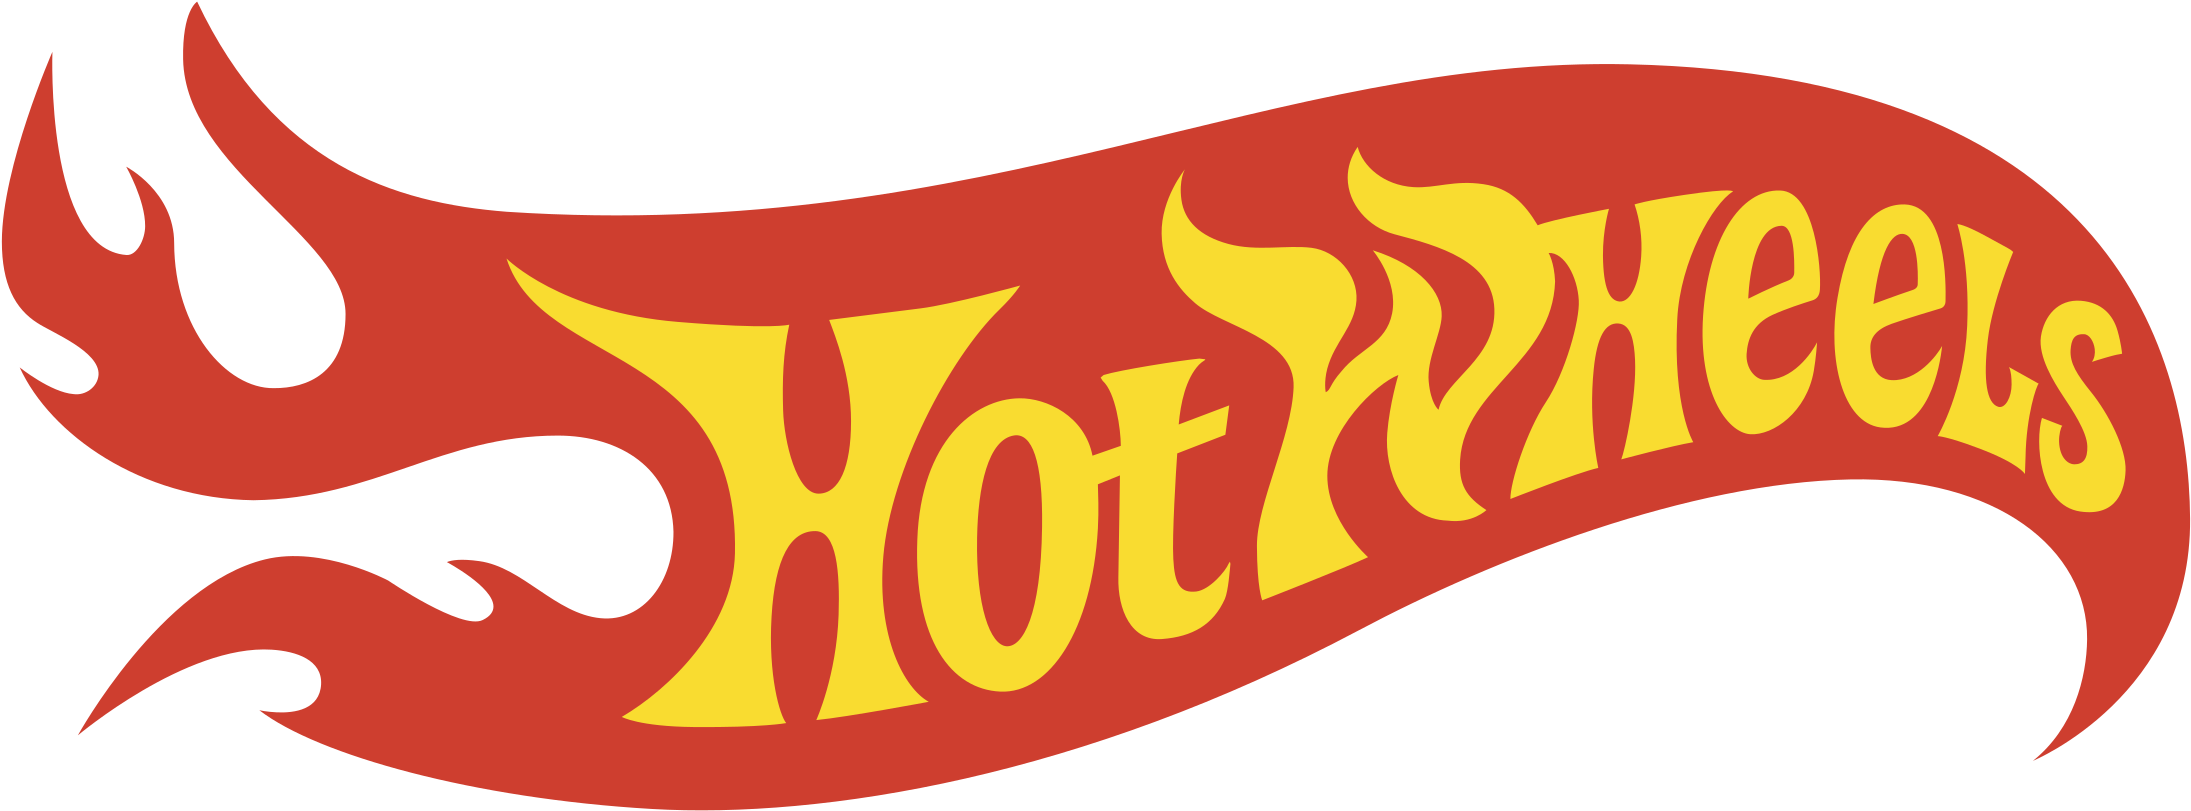 Hot Wheels Logo Transparent Image